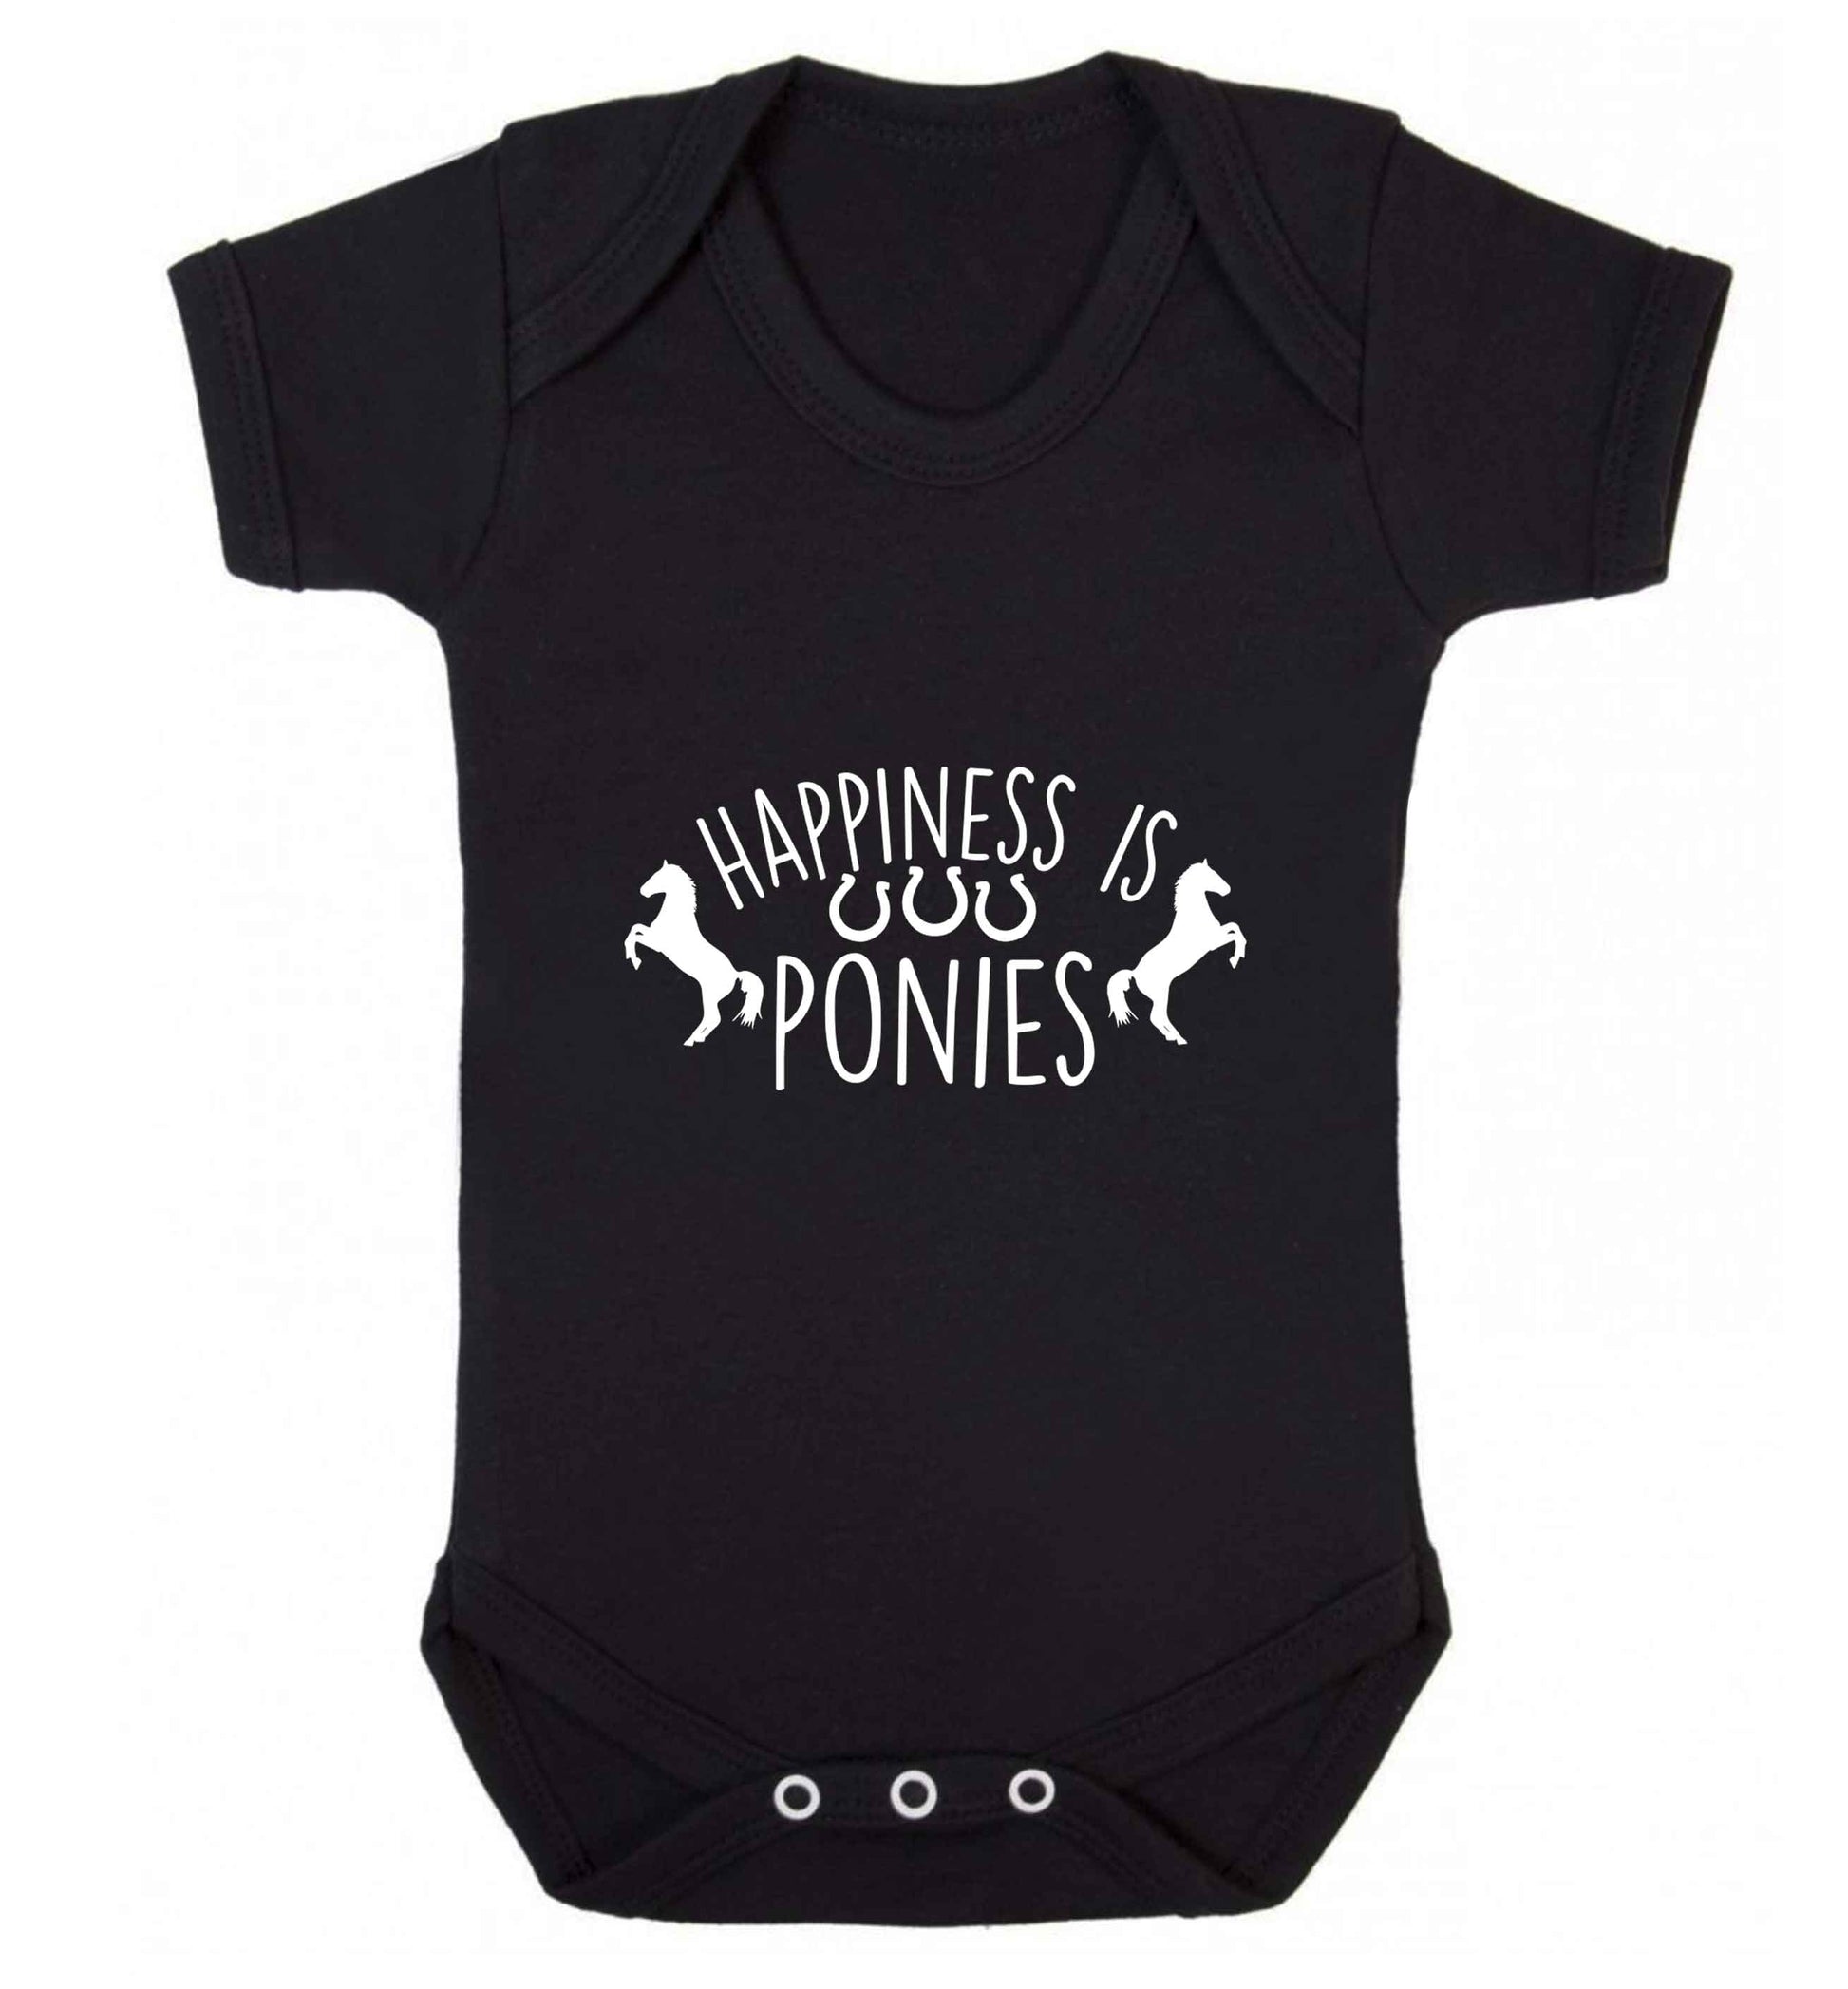 Happiness is ponies baby vest black 18-24 months